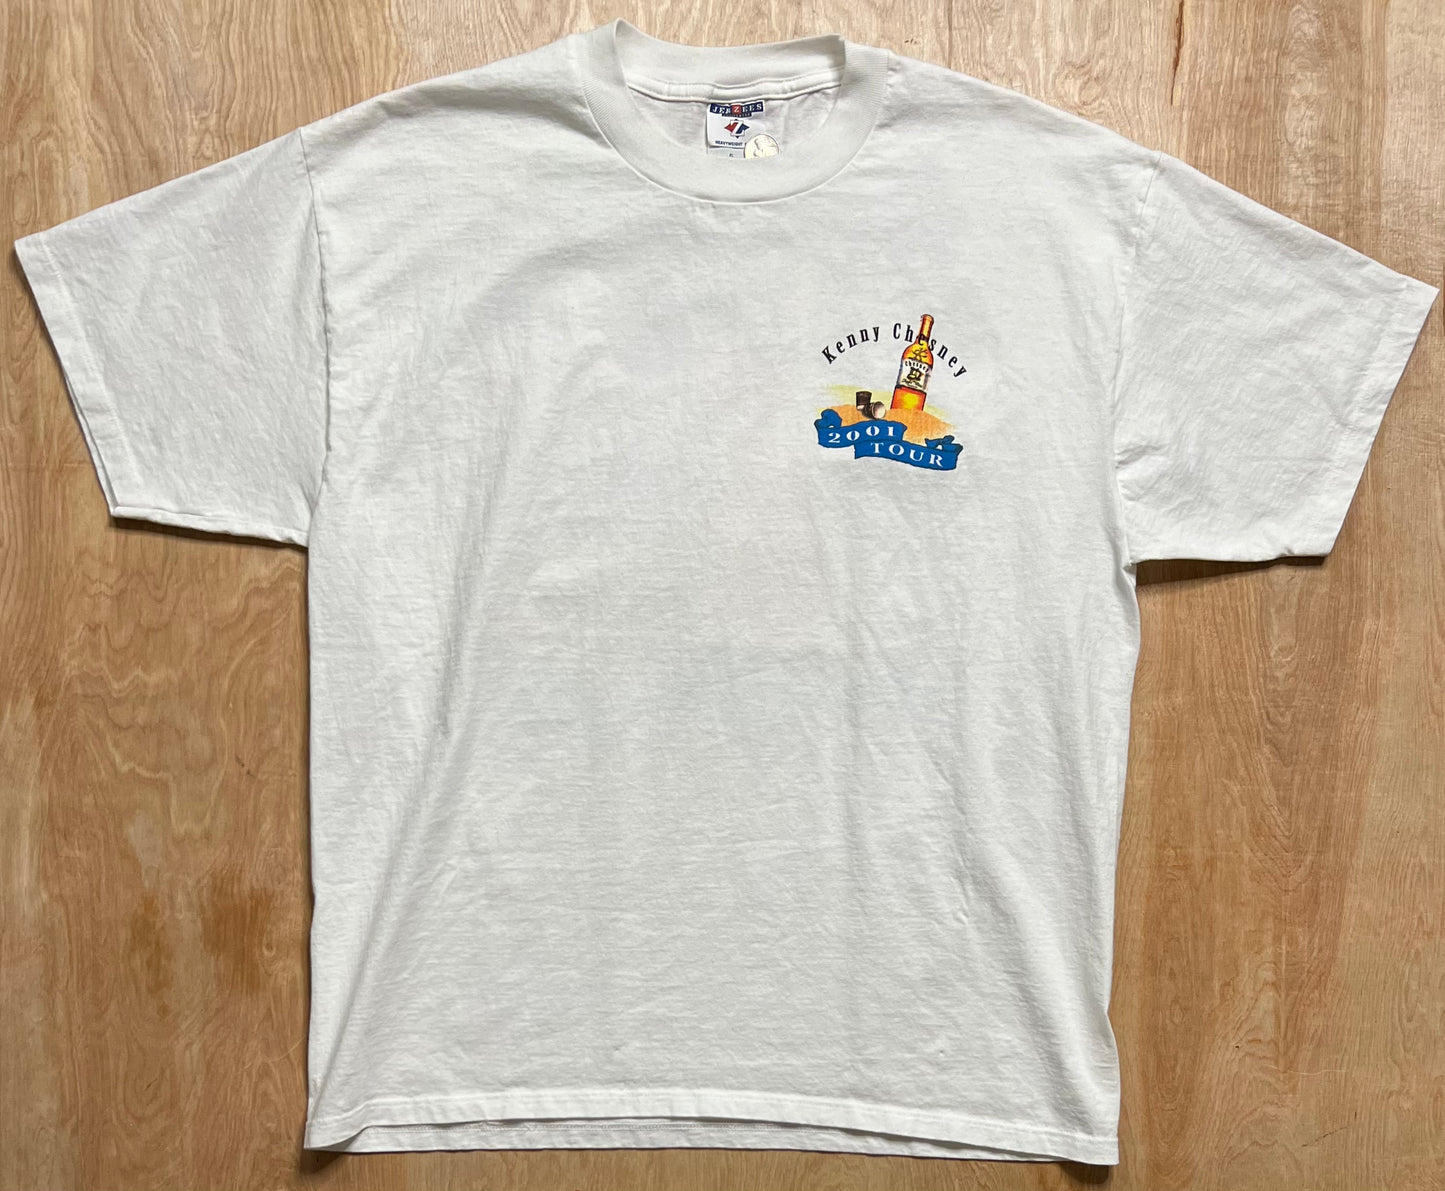 2001 Kenny Chesney "It Don't Happen Twice" Tour T-Shirt